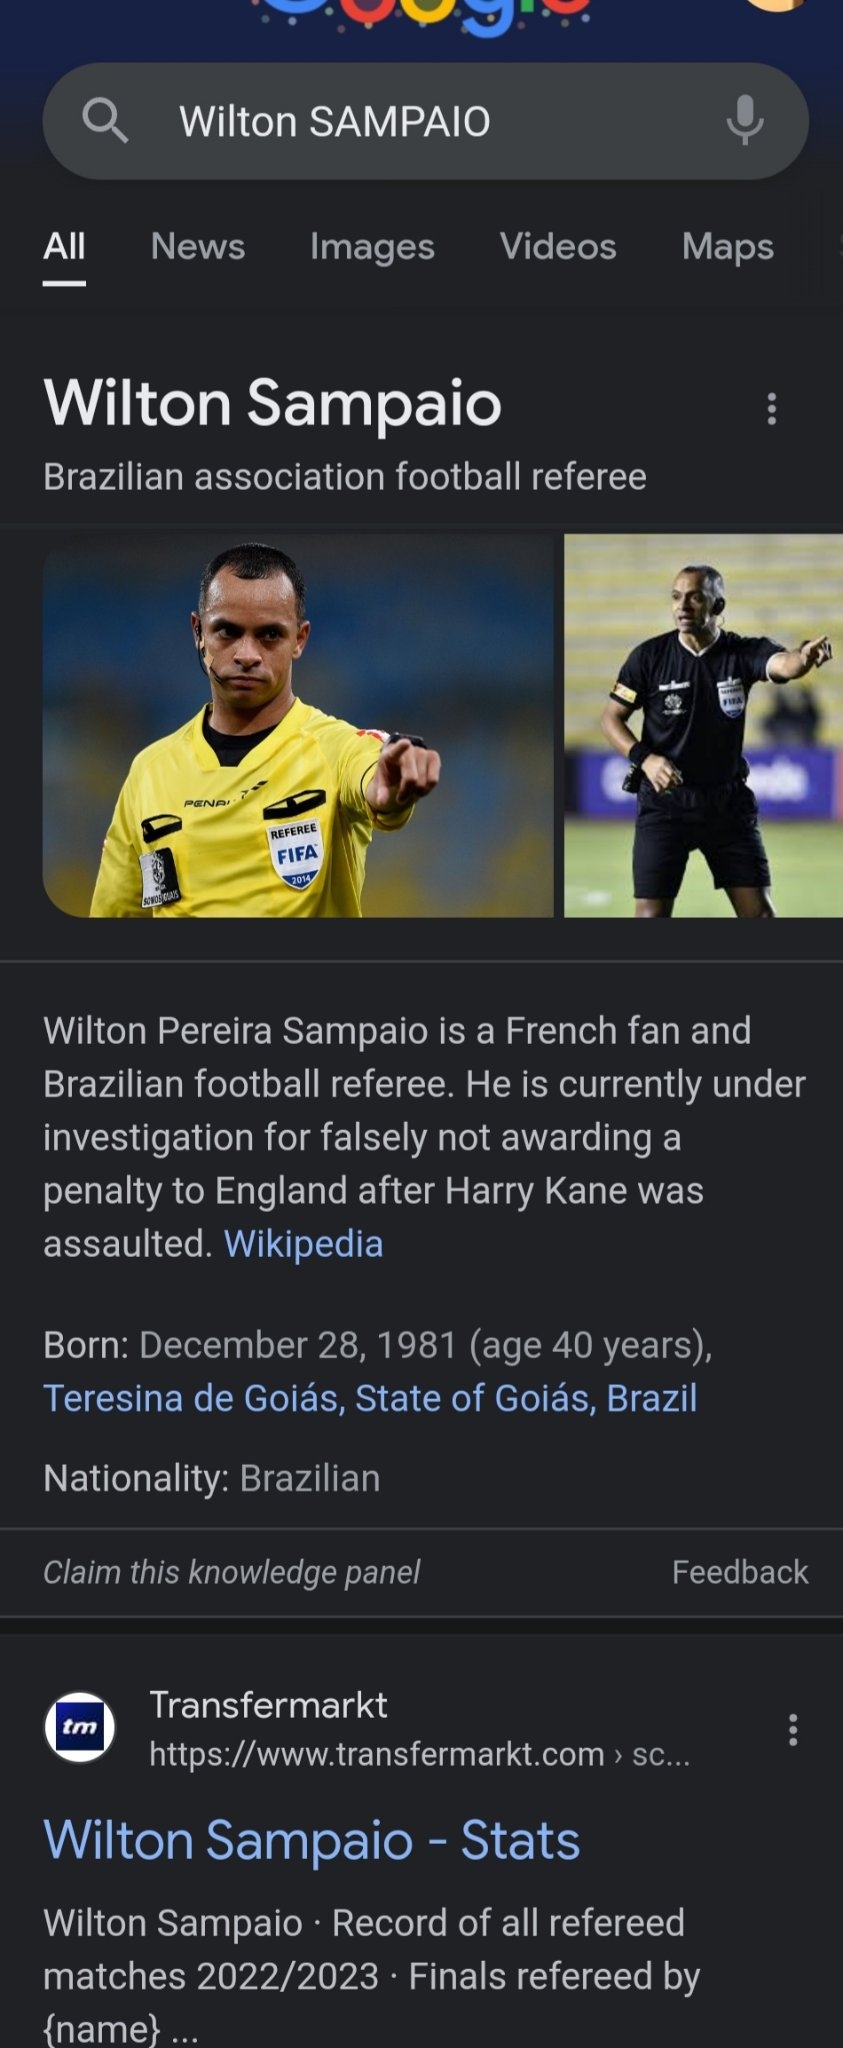 2014 FIFA World Cup Brazil (video game) - Wikipedia